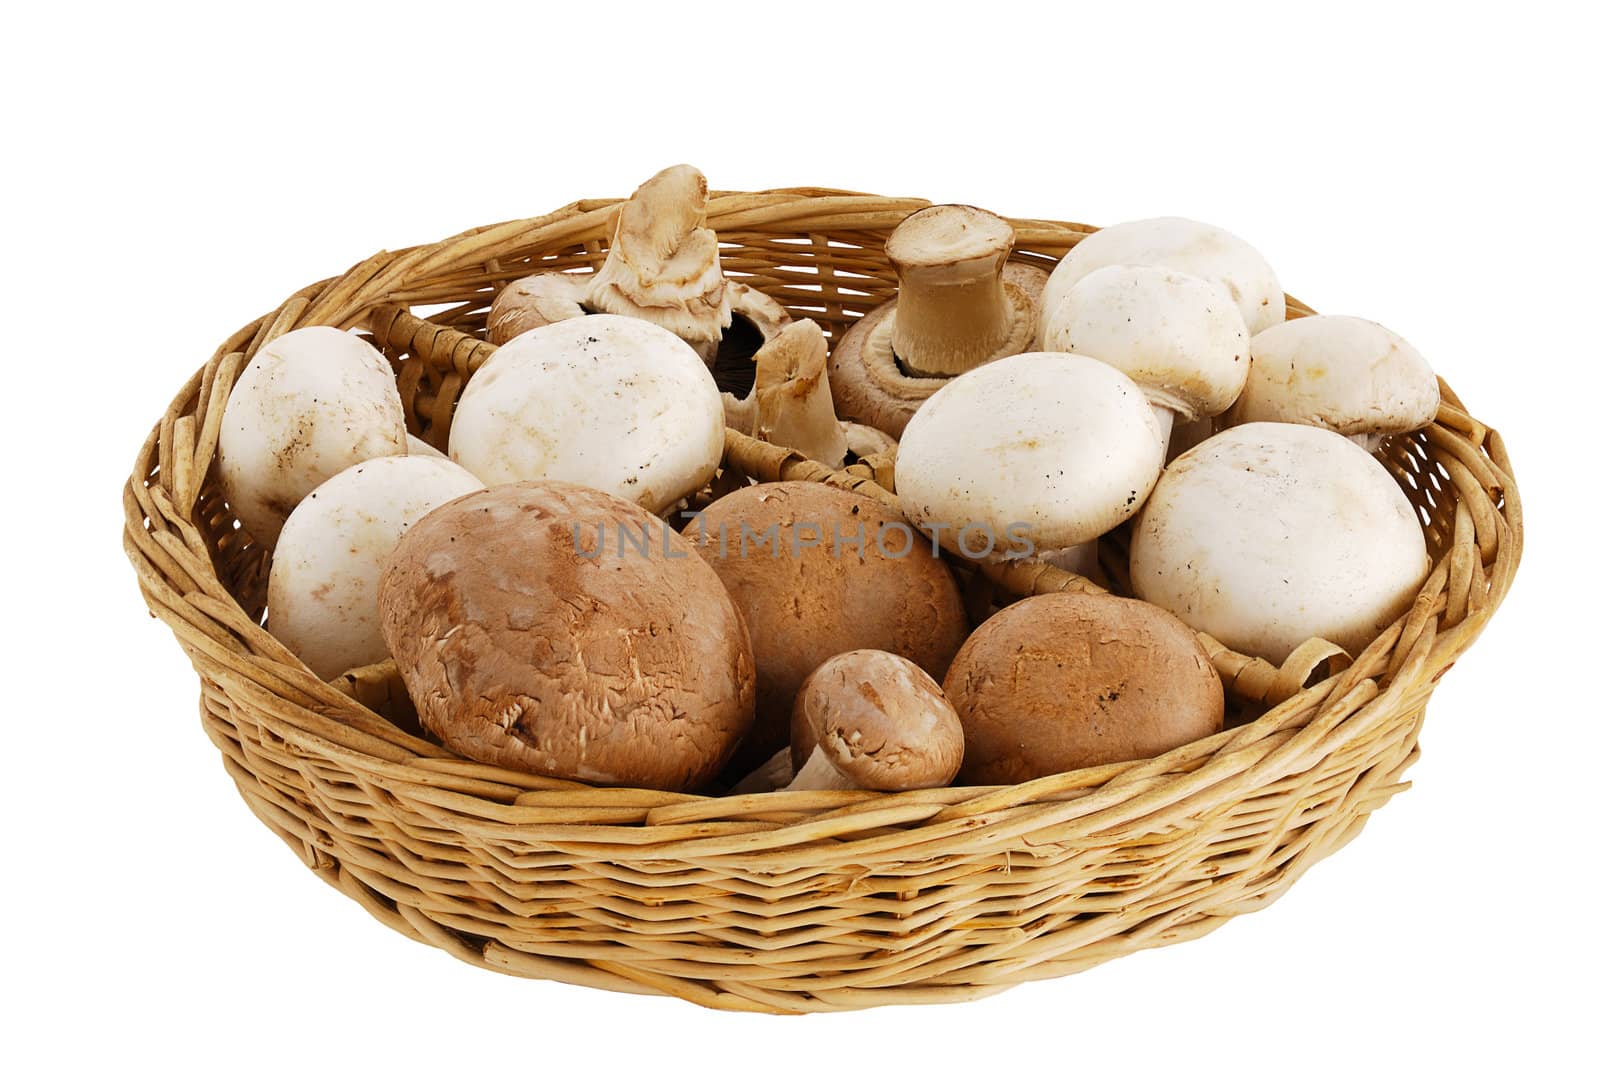 Mushroom mix in straw basket by vadidak